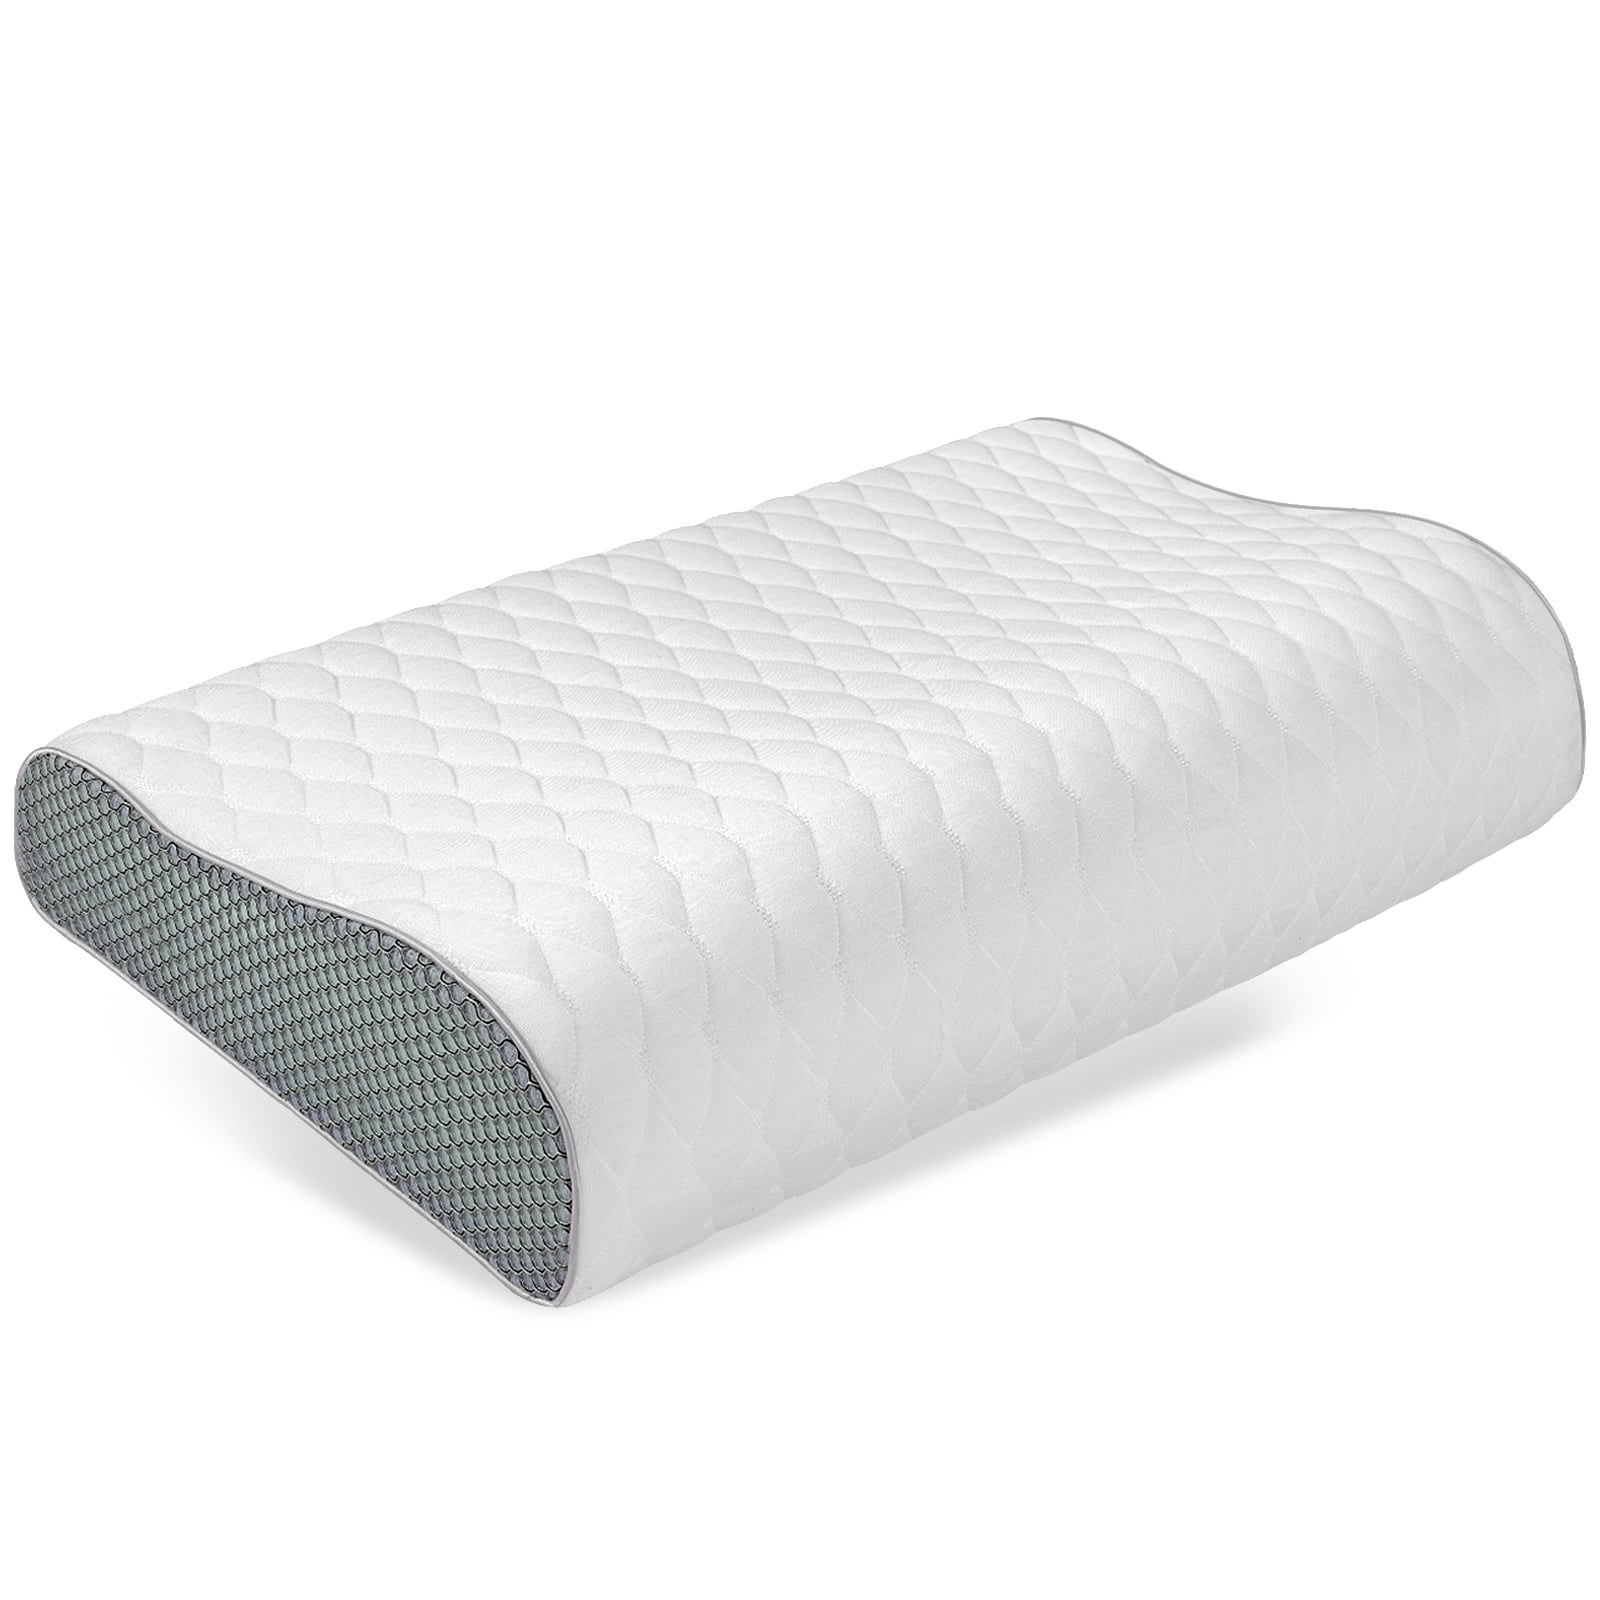  Vive Full Lumbar Pillow - Memory Foam Contour Support